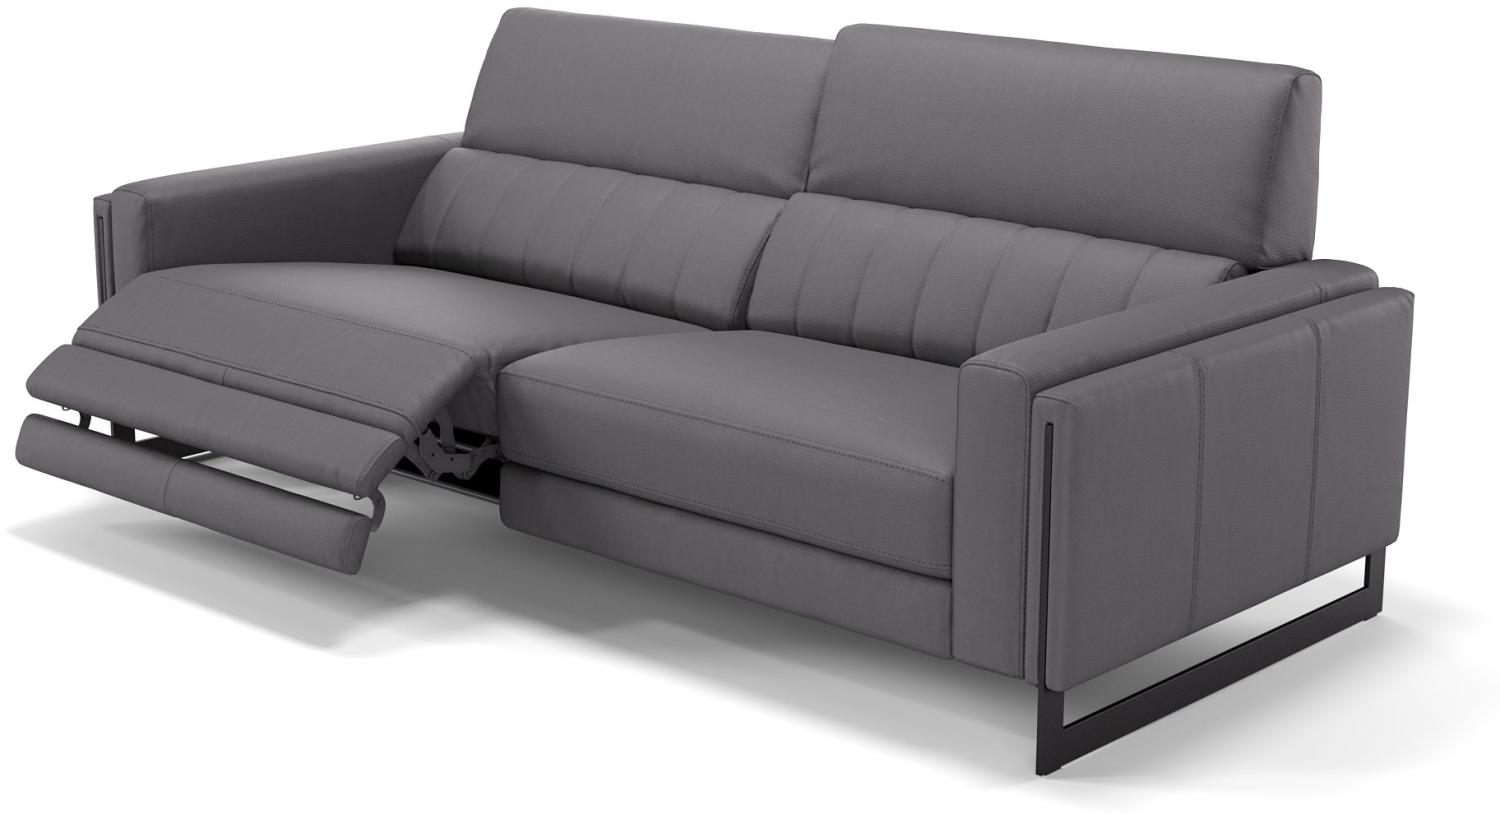 Sofanella 3-Sitzer MARA Leder Sofa Sofagarnitur in Grau M: 232 Breite x 101 Tiefe Bild 1